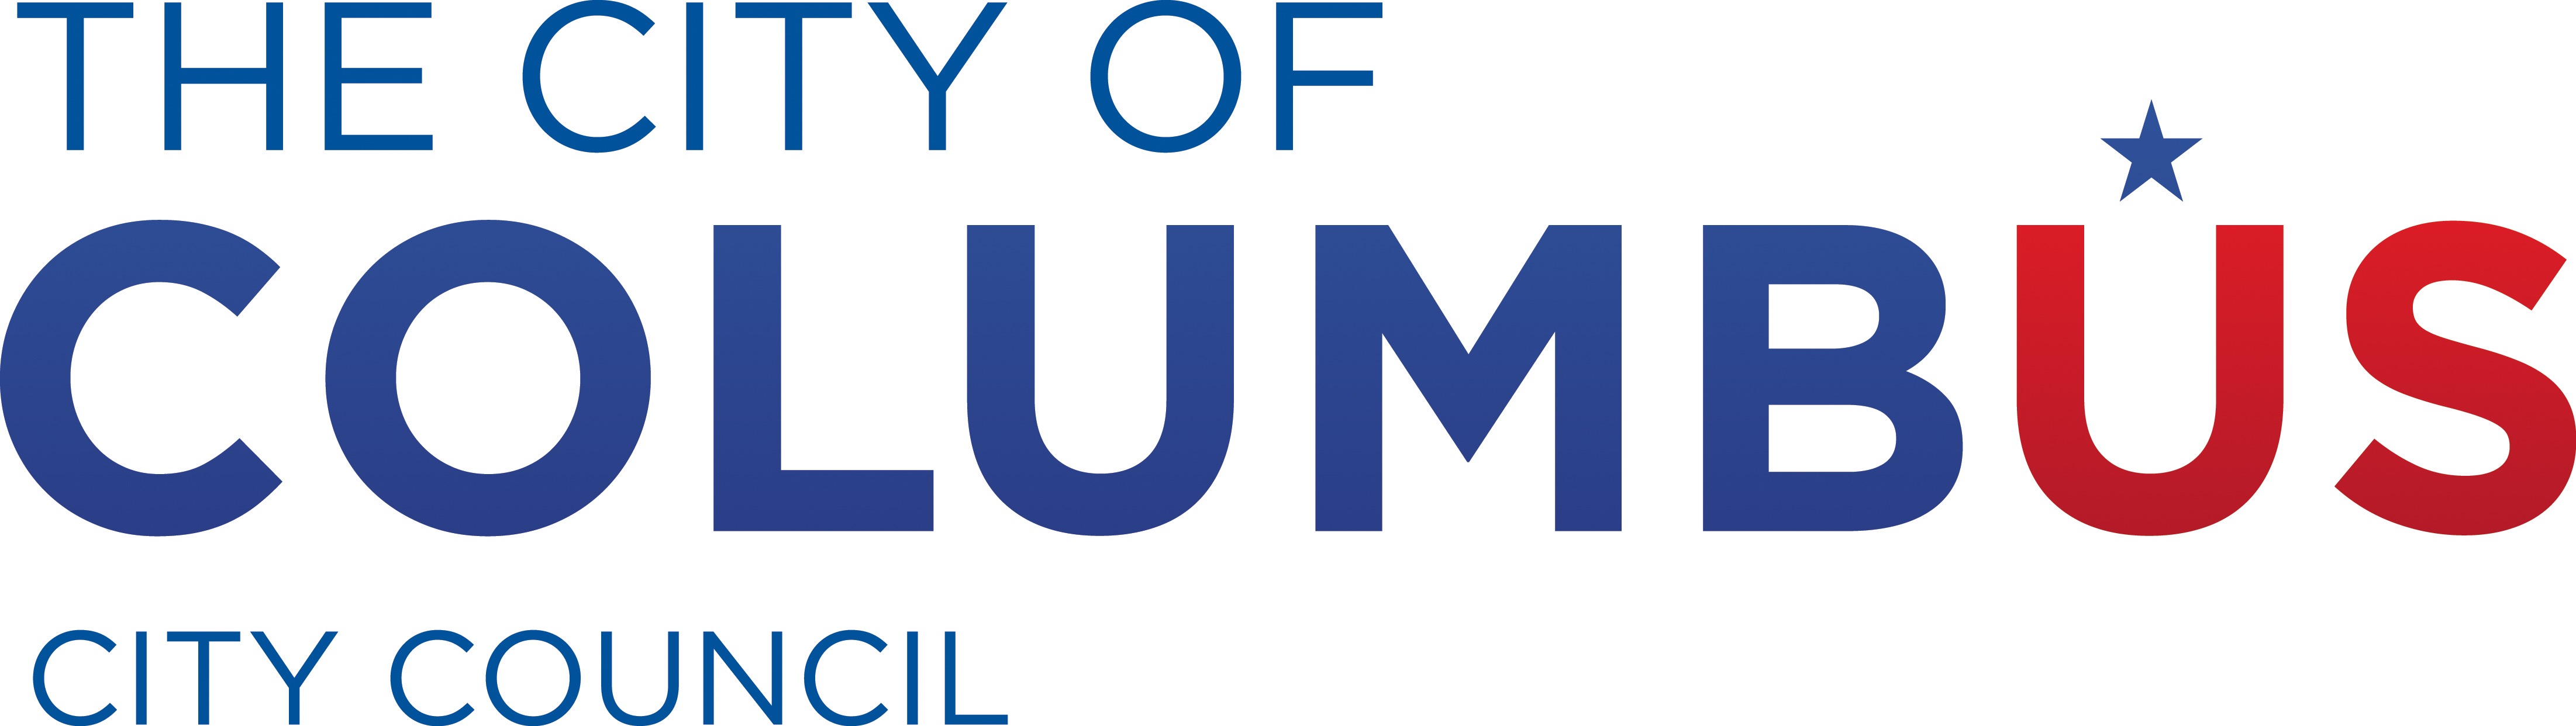 The City of Columbus City Council Logo